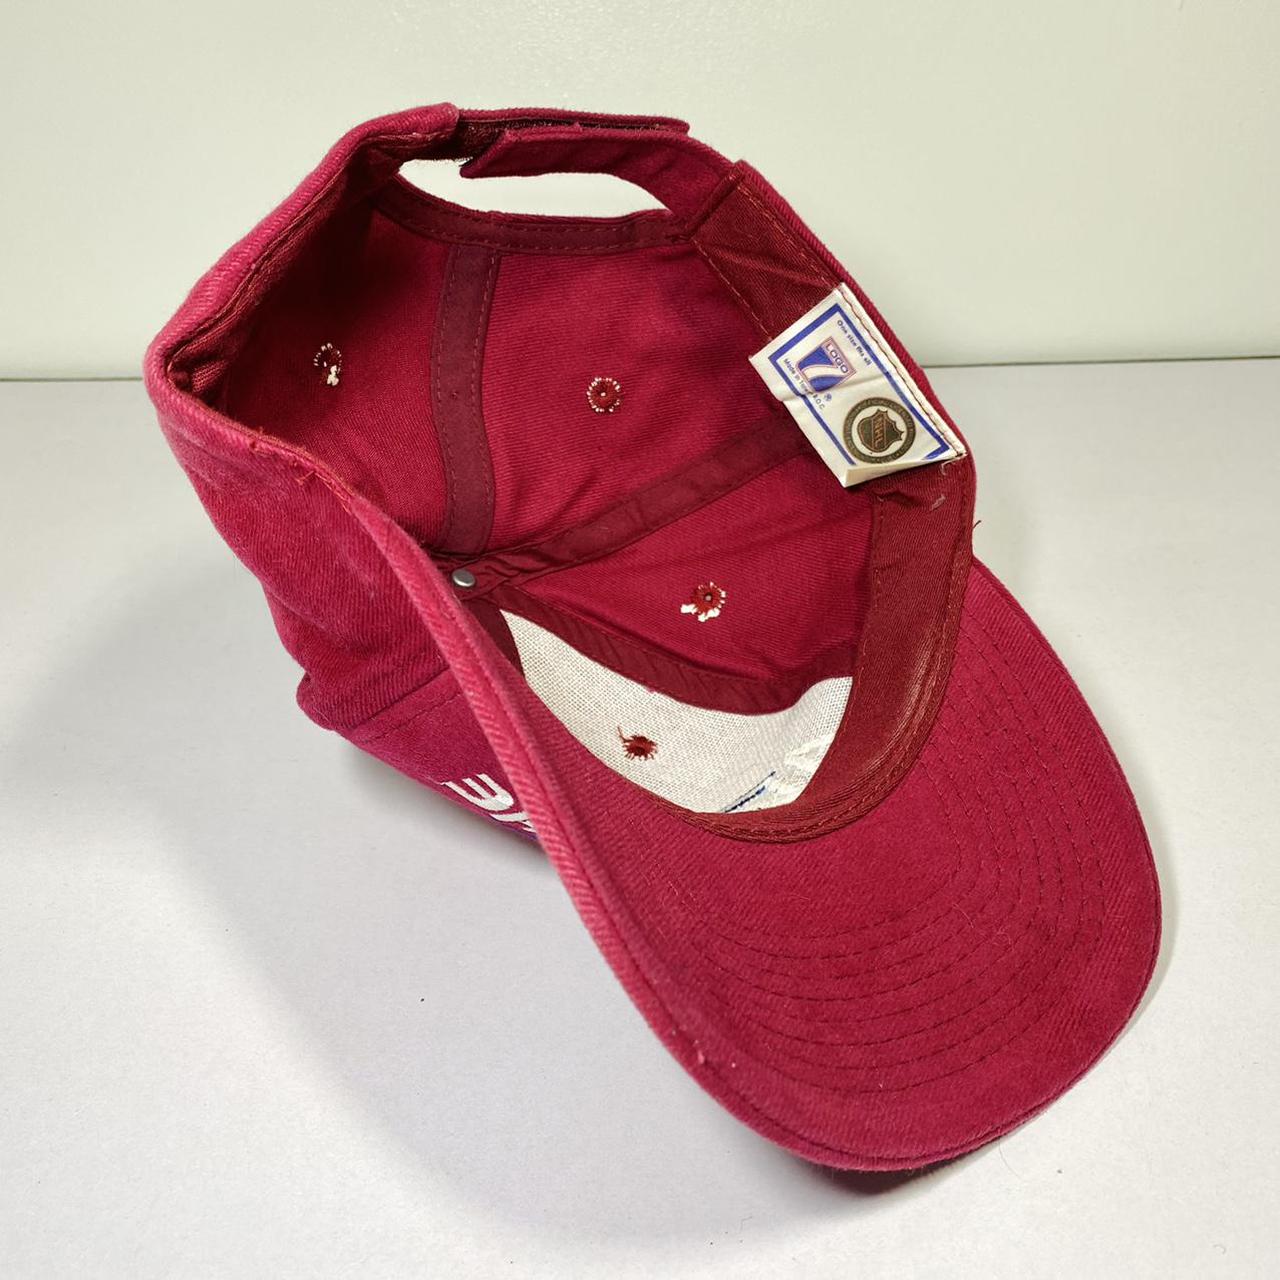 Vintage 90s Colorado Avalanche Hat Classic Zephyr - Depop